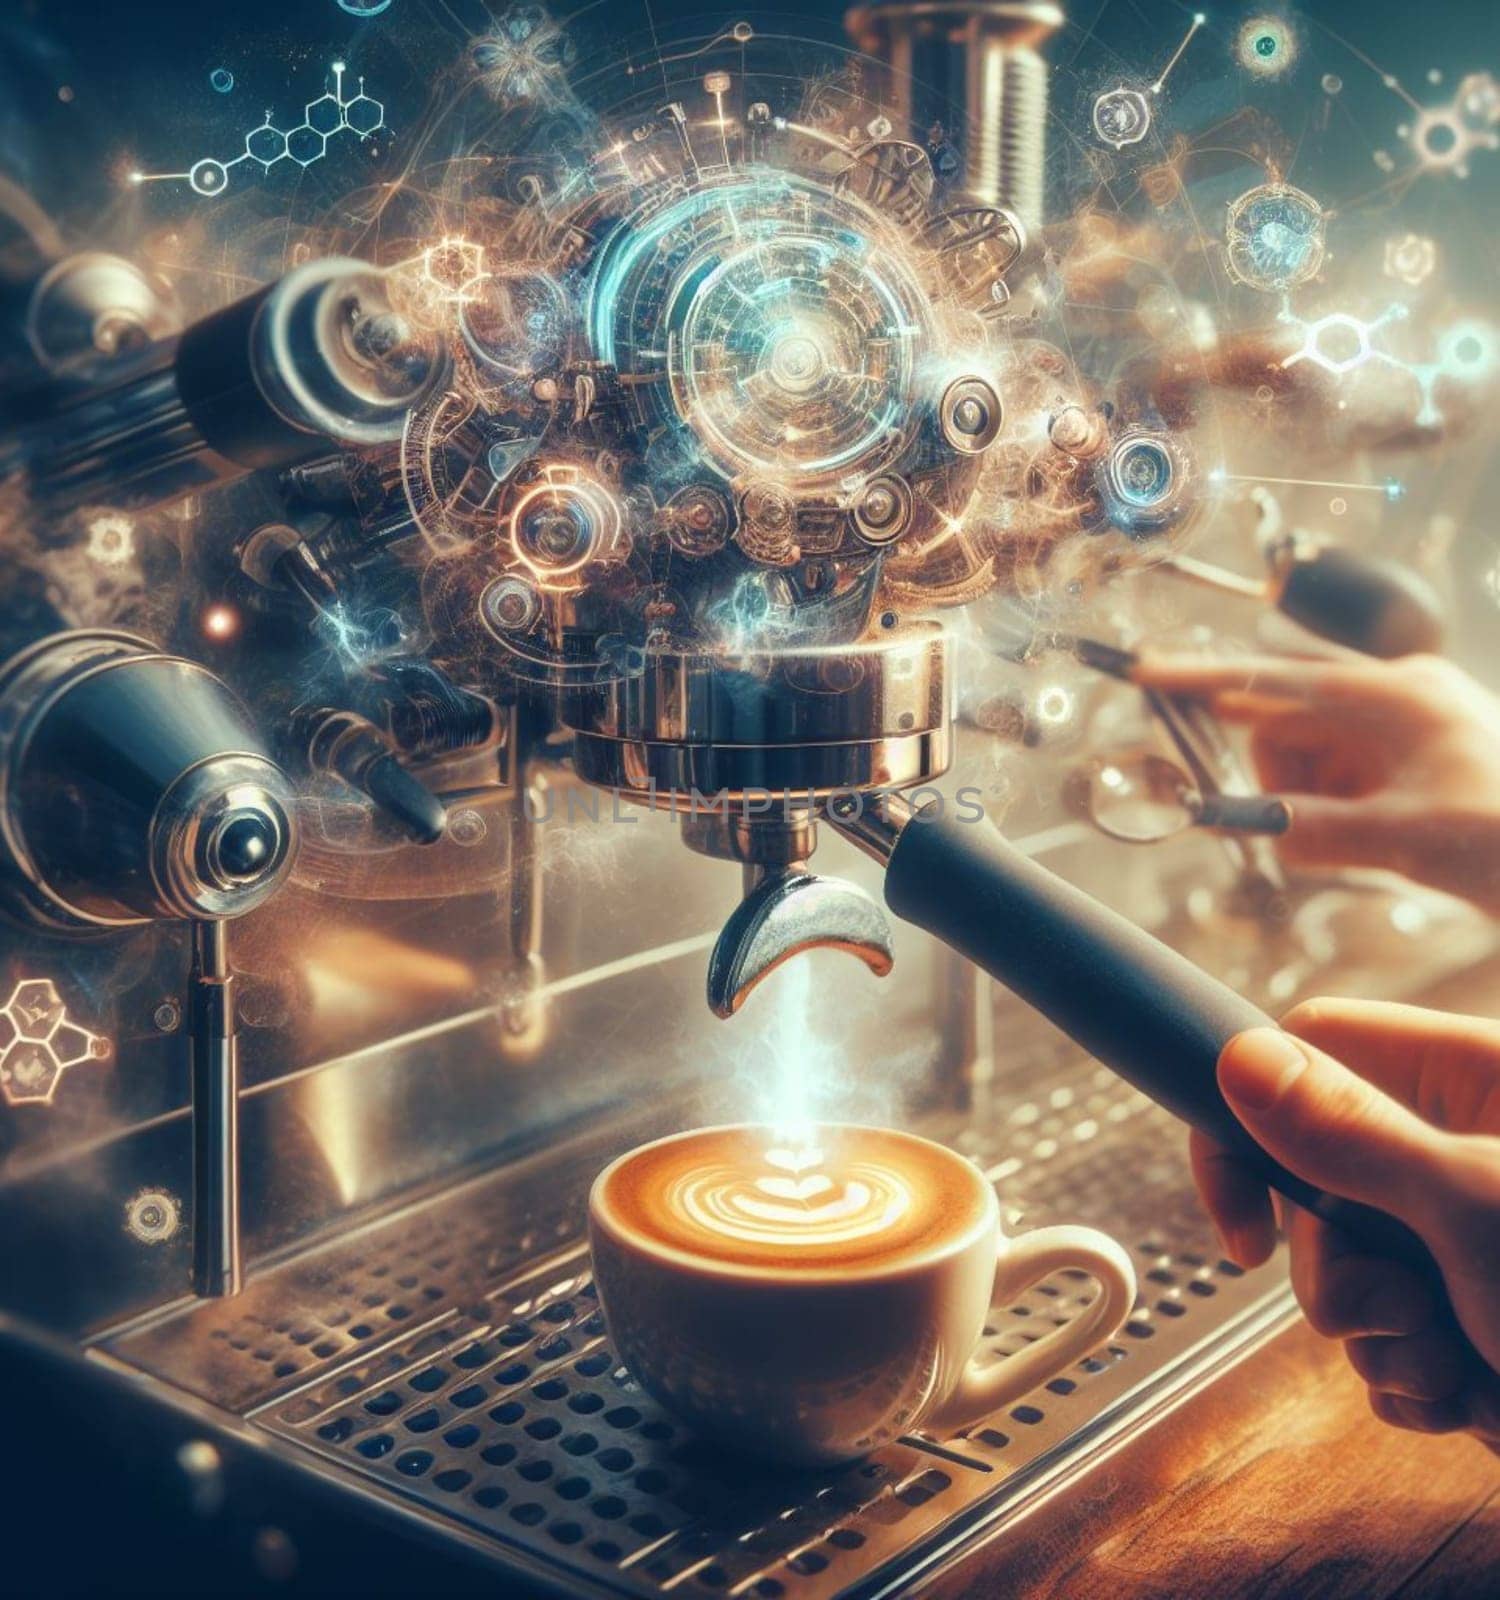 make latte art golden cappuccino at bar expert barista splashing cream fantasy illustration render art generated